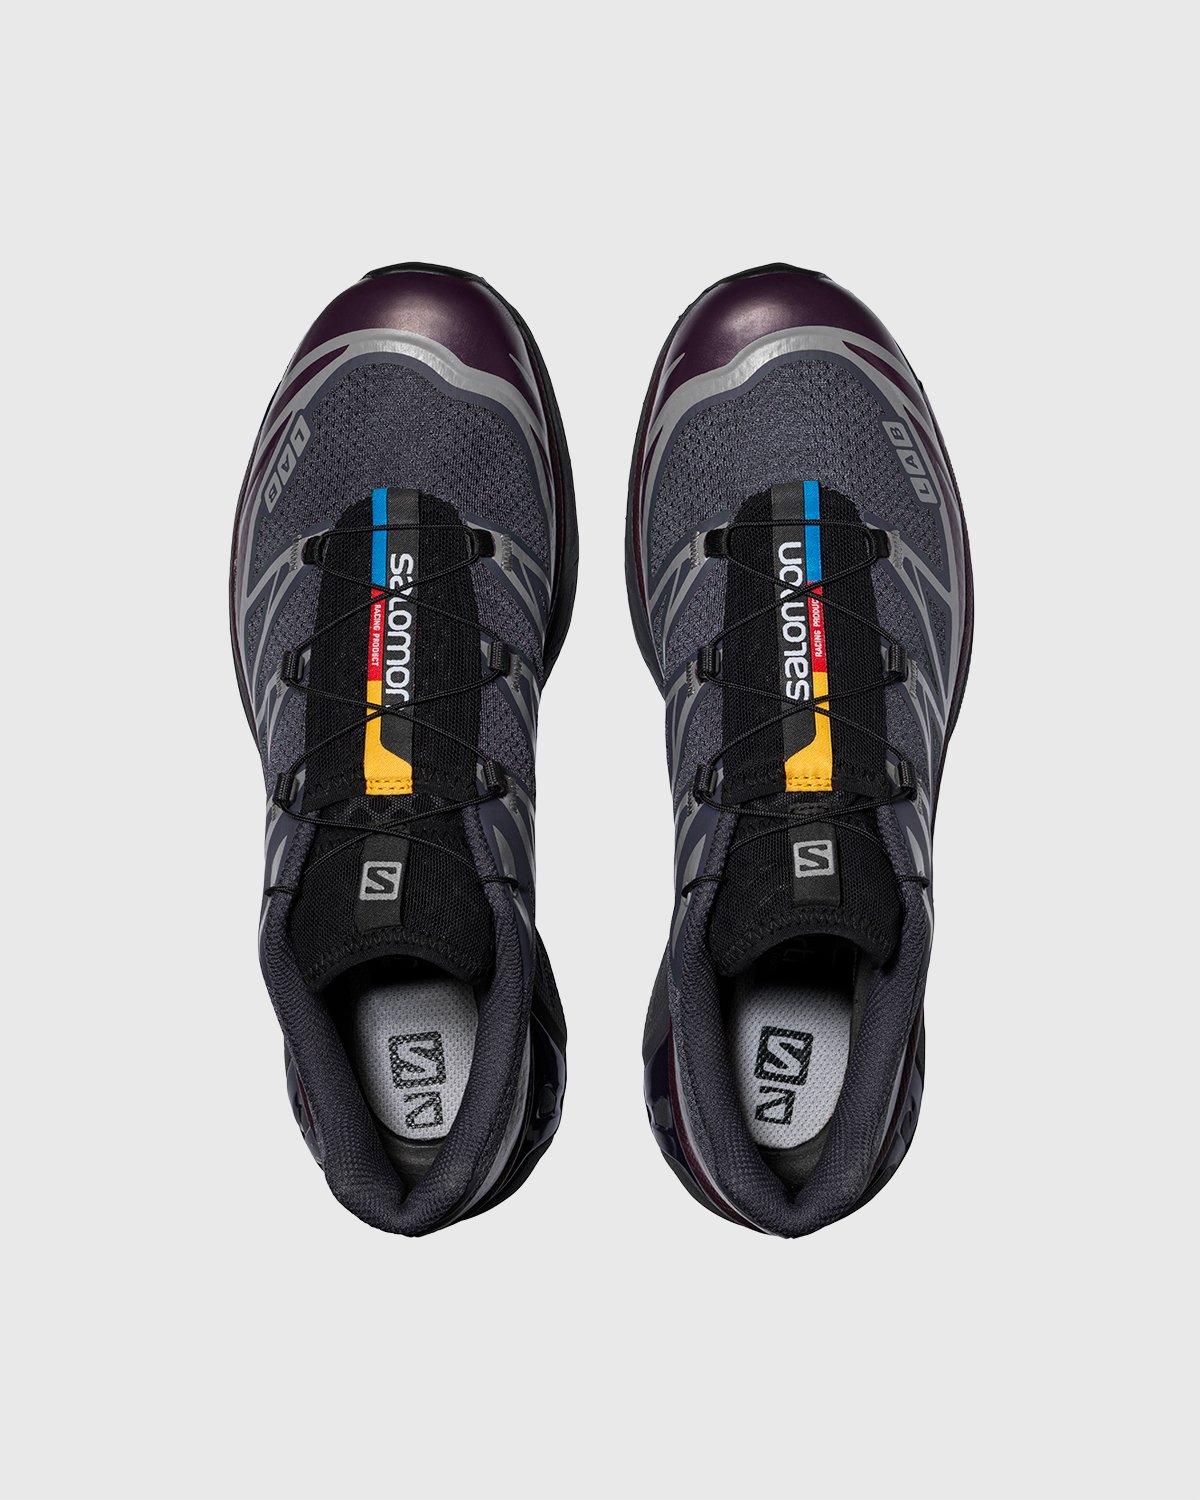 Salomon - XT-6 Advanced Ebony - Footwear - Black - Image 4